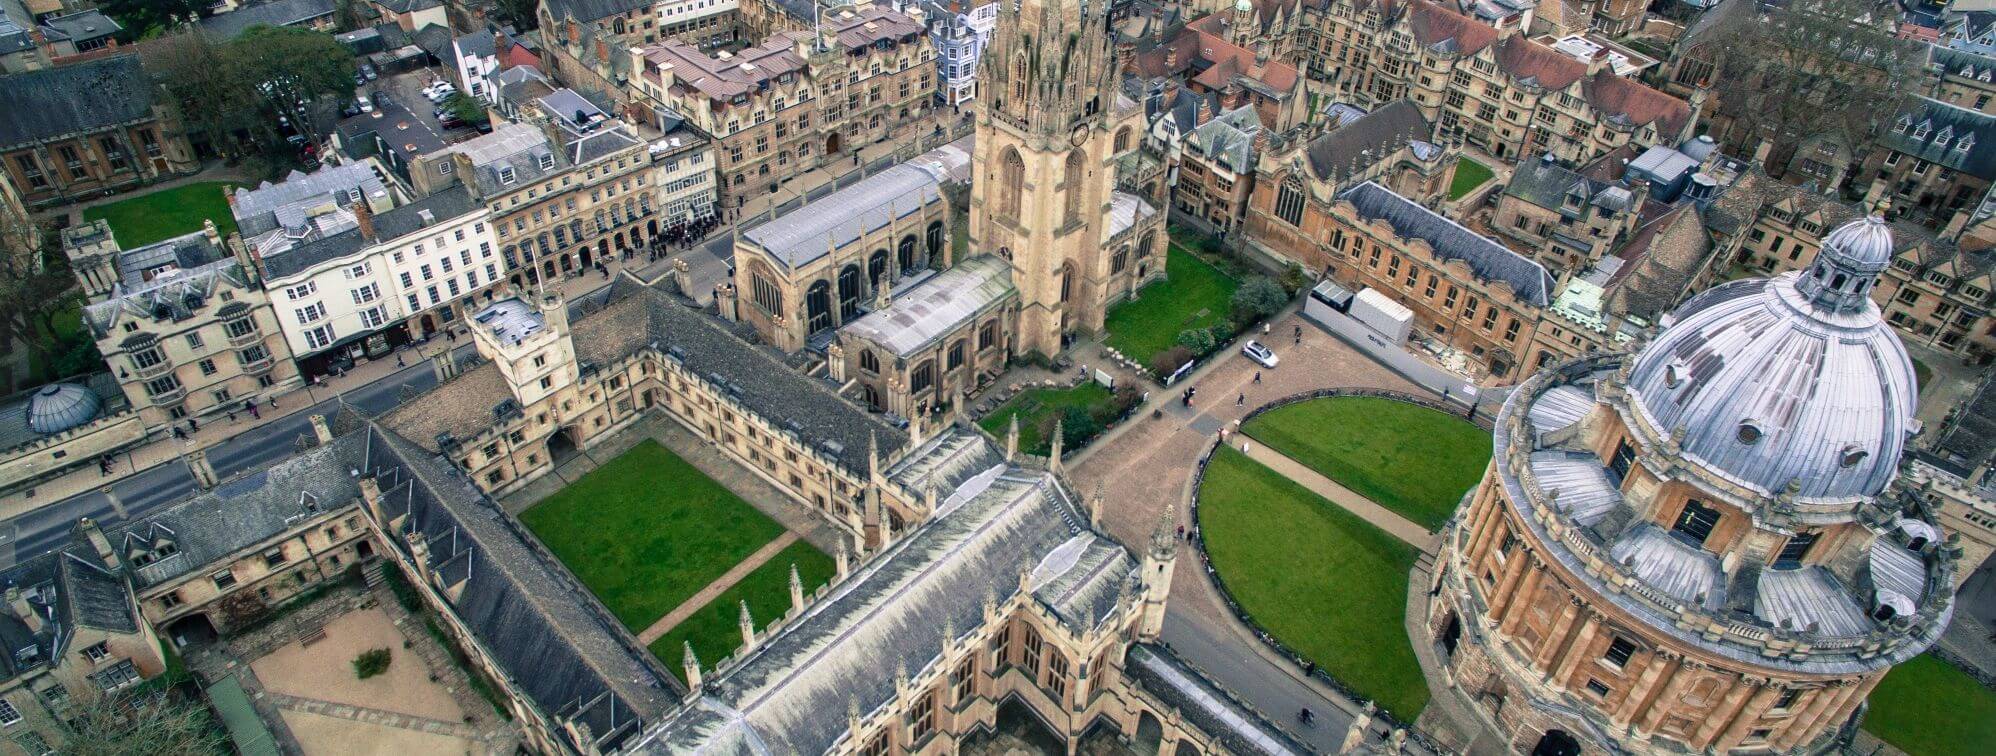 Oxford postgraduate students